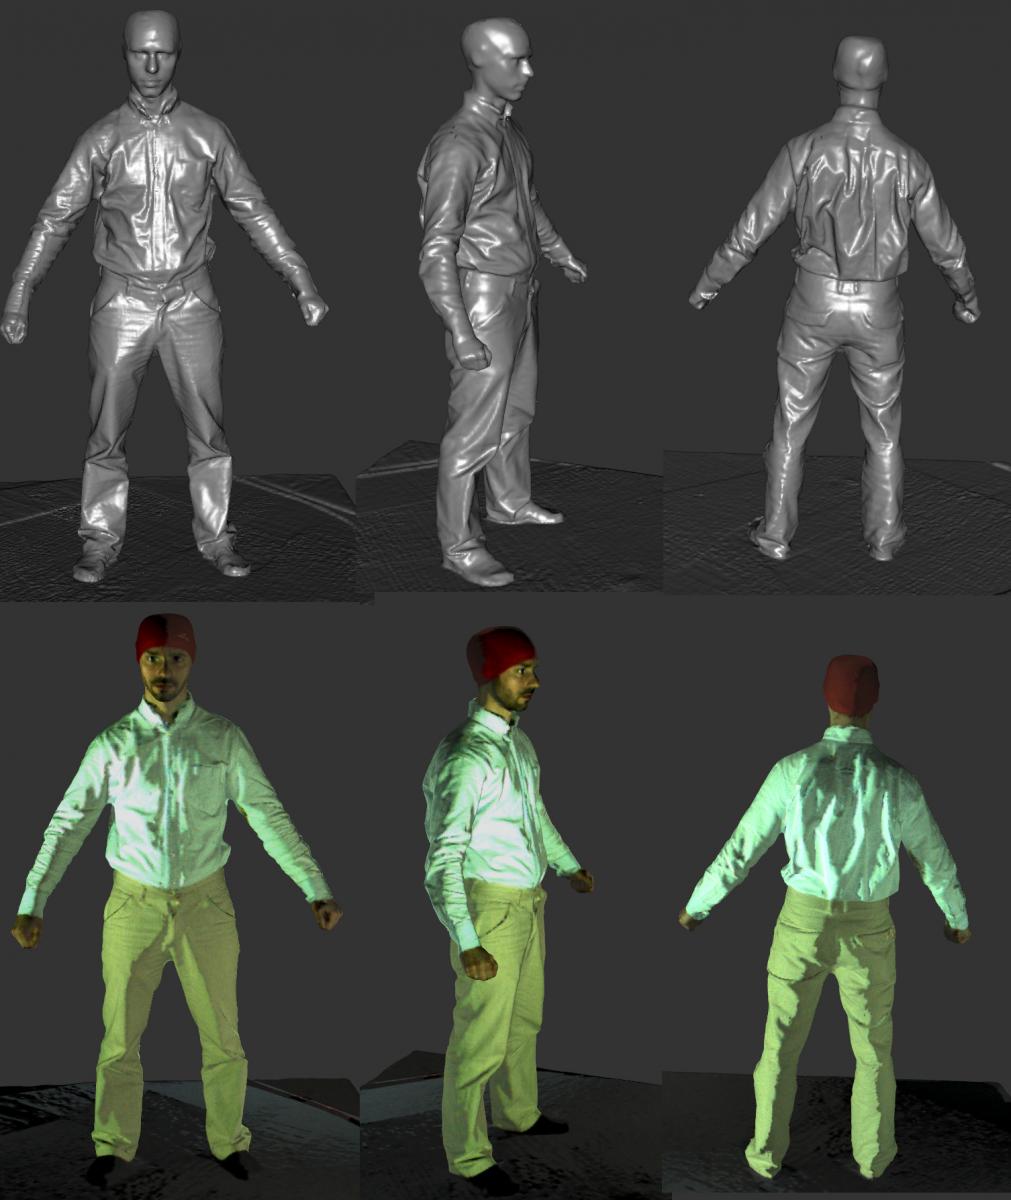 3D Body Scanning